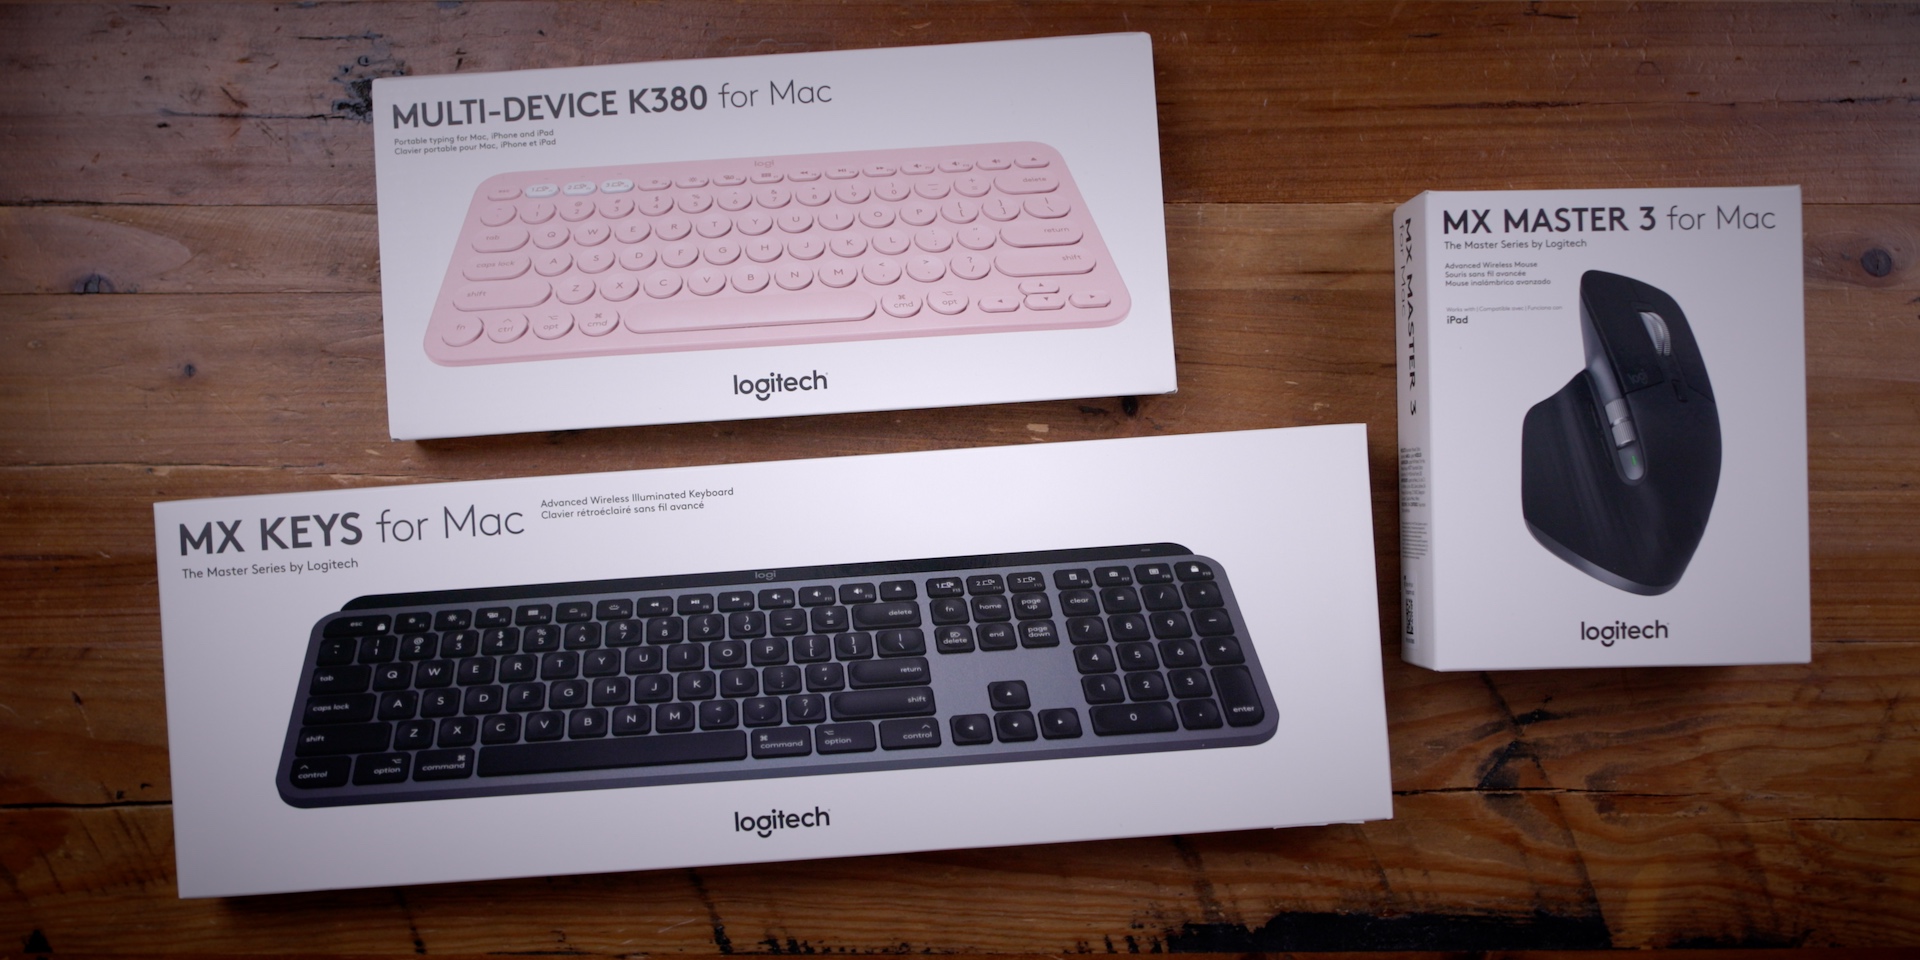 Temporada contar hasta molécula Hands-on: Logitech MX Master 3, MX Keys, and K380 keyboard - 9to5Mac